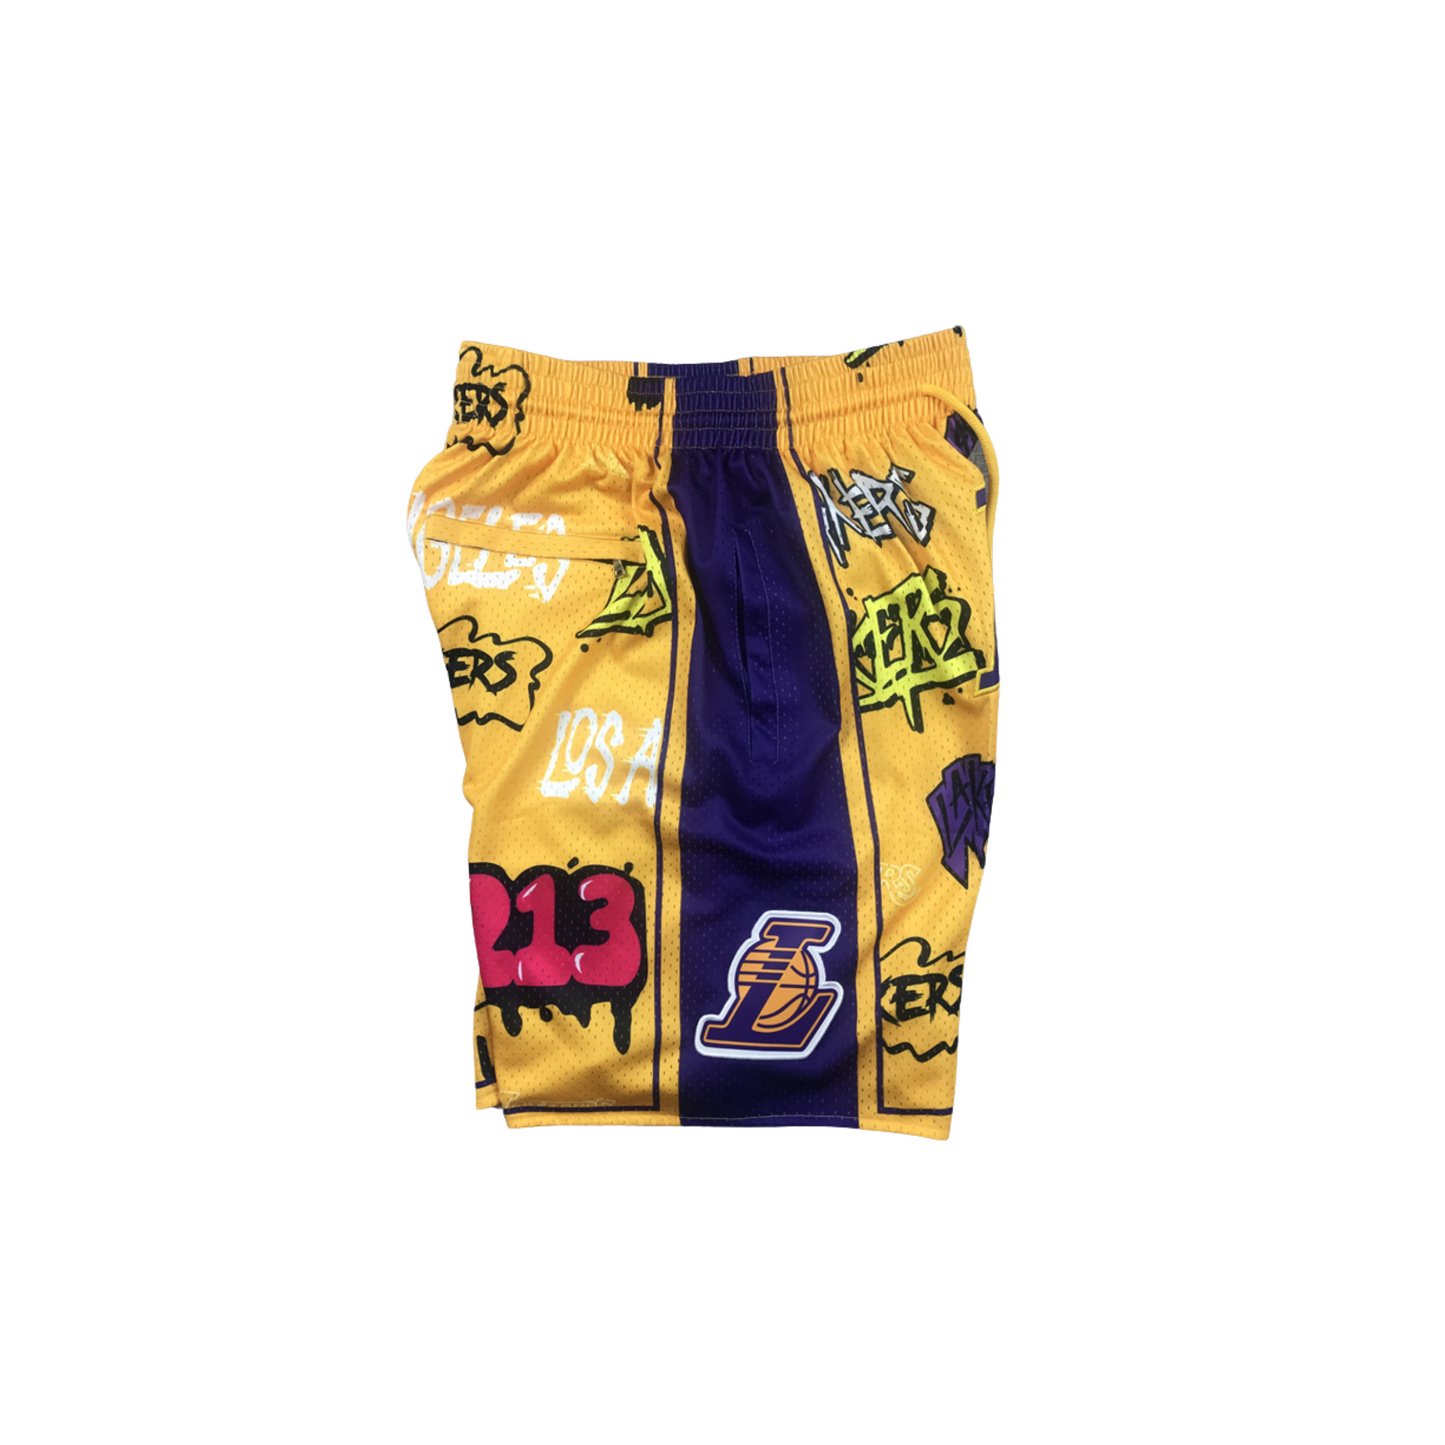 Los Angeles Lakers Hoopen Graffiti™ Basketball Shorts